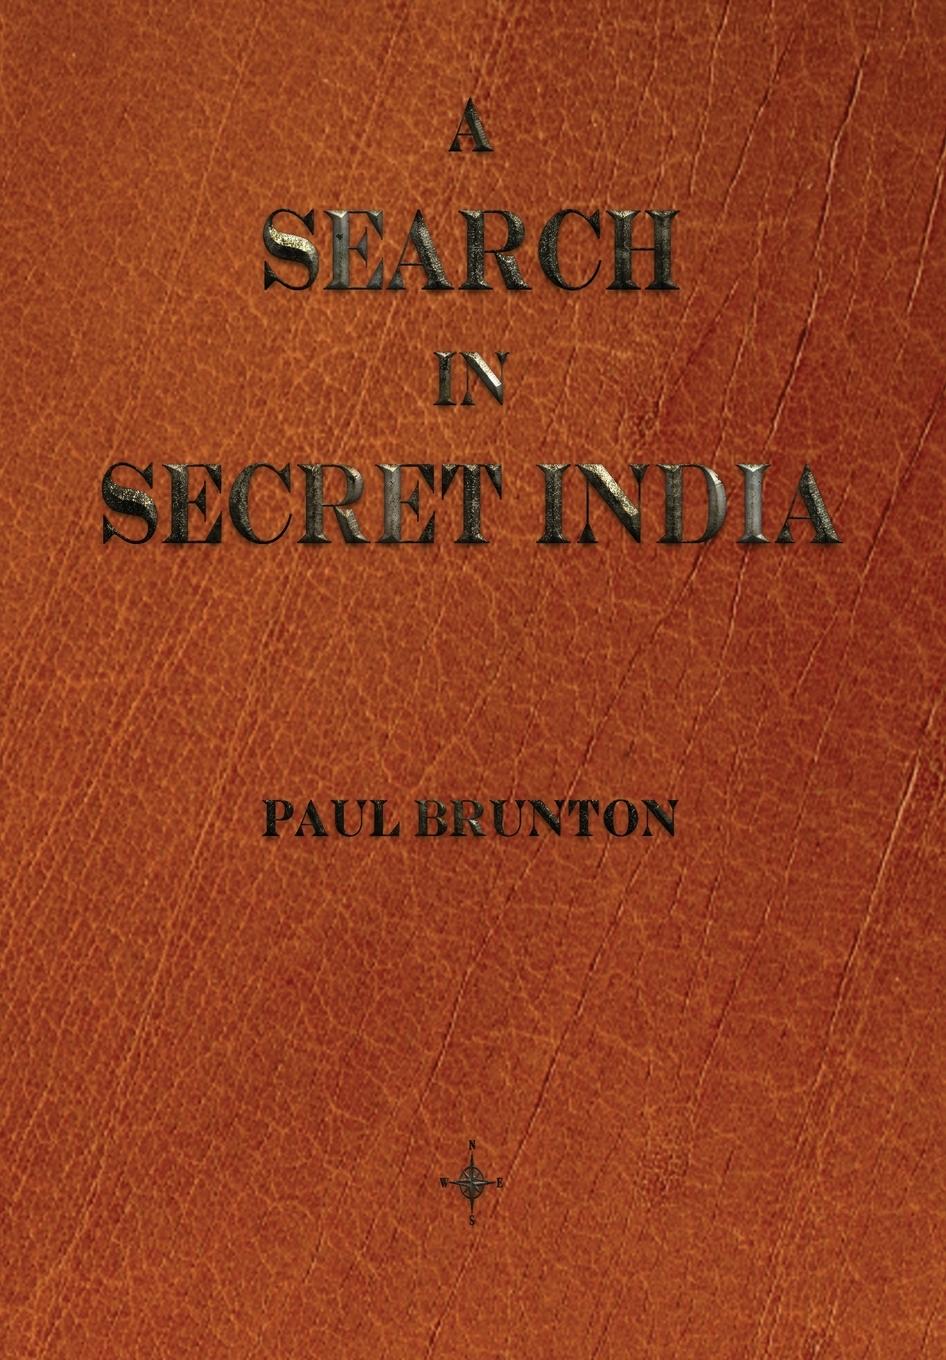 A Search In Secret India - Brunton, Paul